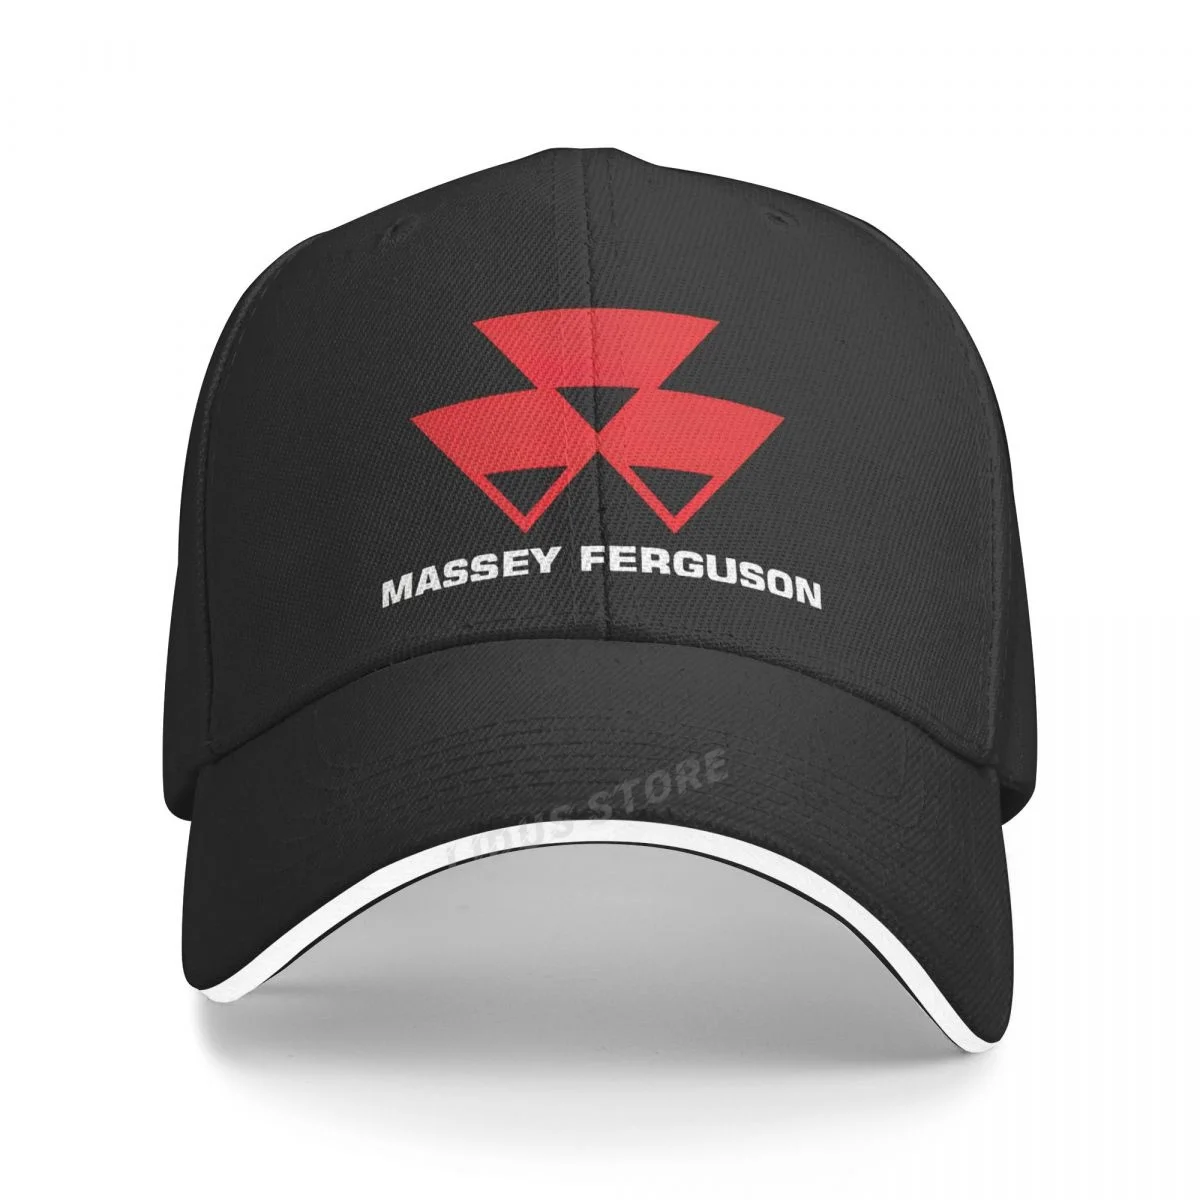 Massey Ferguson Baseball Caps Summer Casual Adjustable Men Outdoor Tractor Agriculture Logo Hats